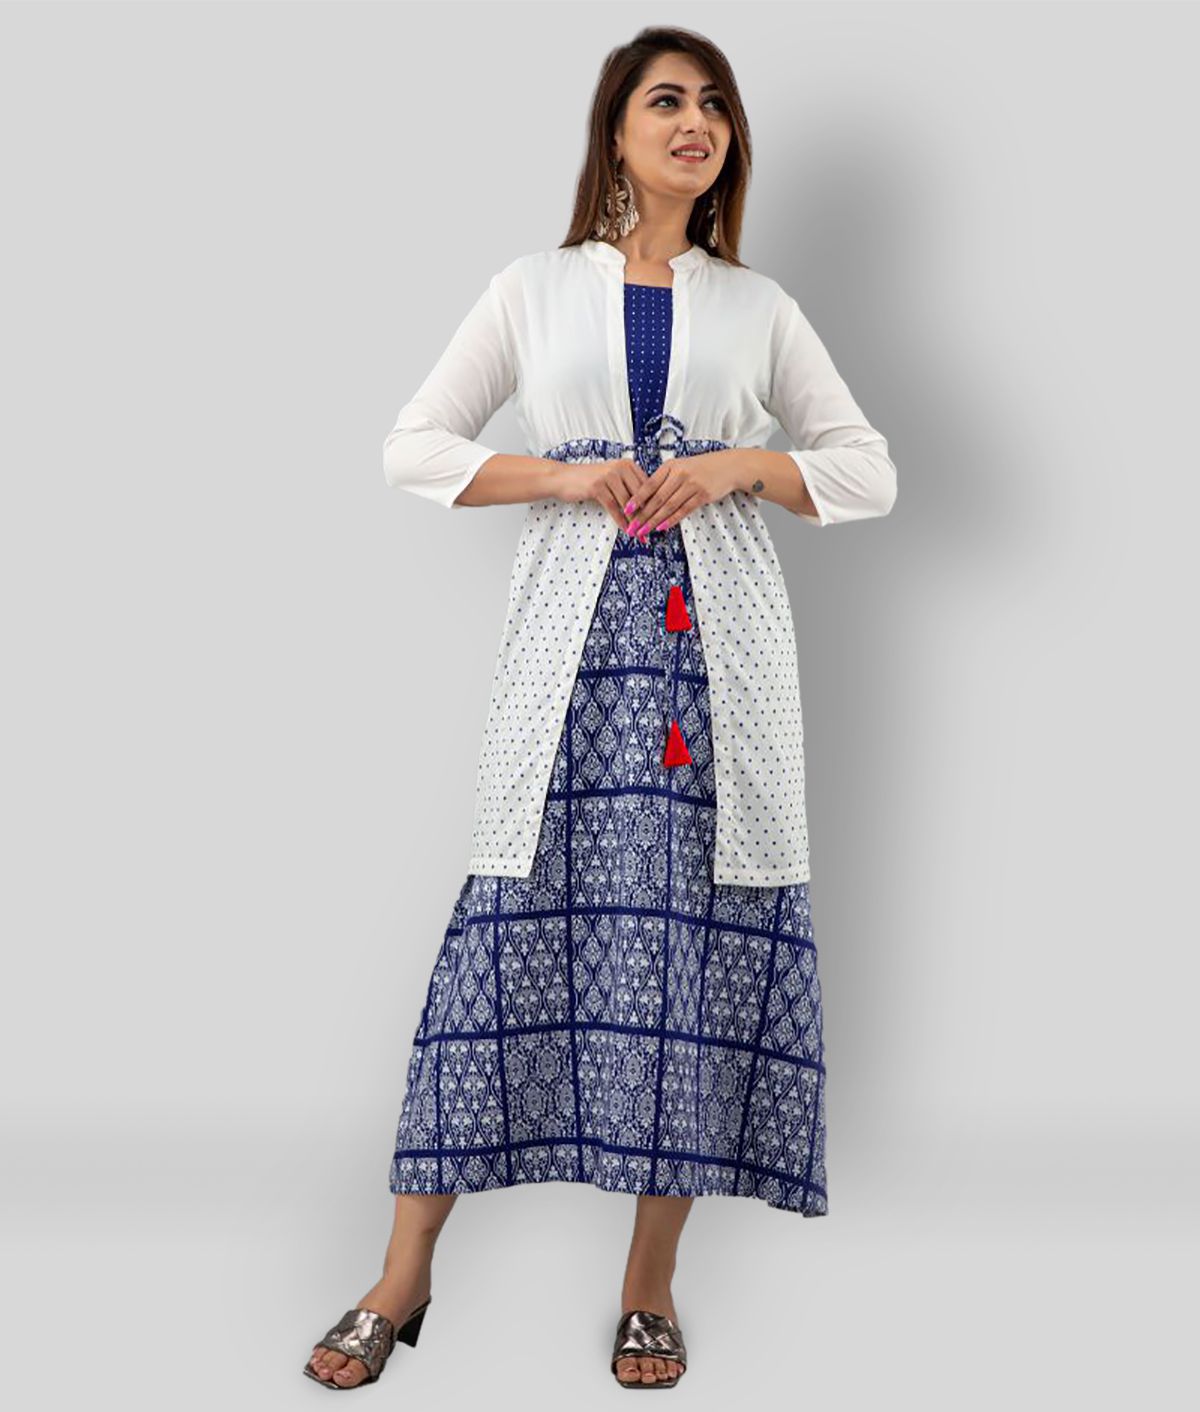 SVARCHI - Multicolor Rayon Women's Jacket Style Kurti ( Pack of 1 )